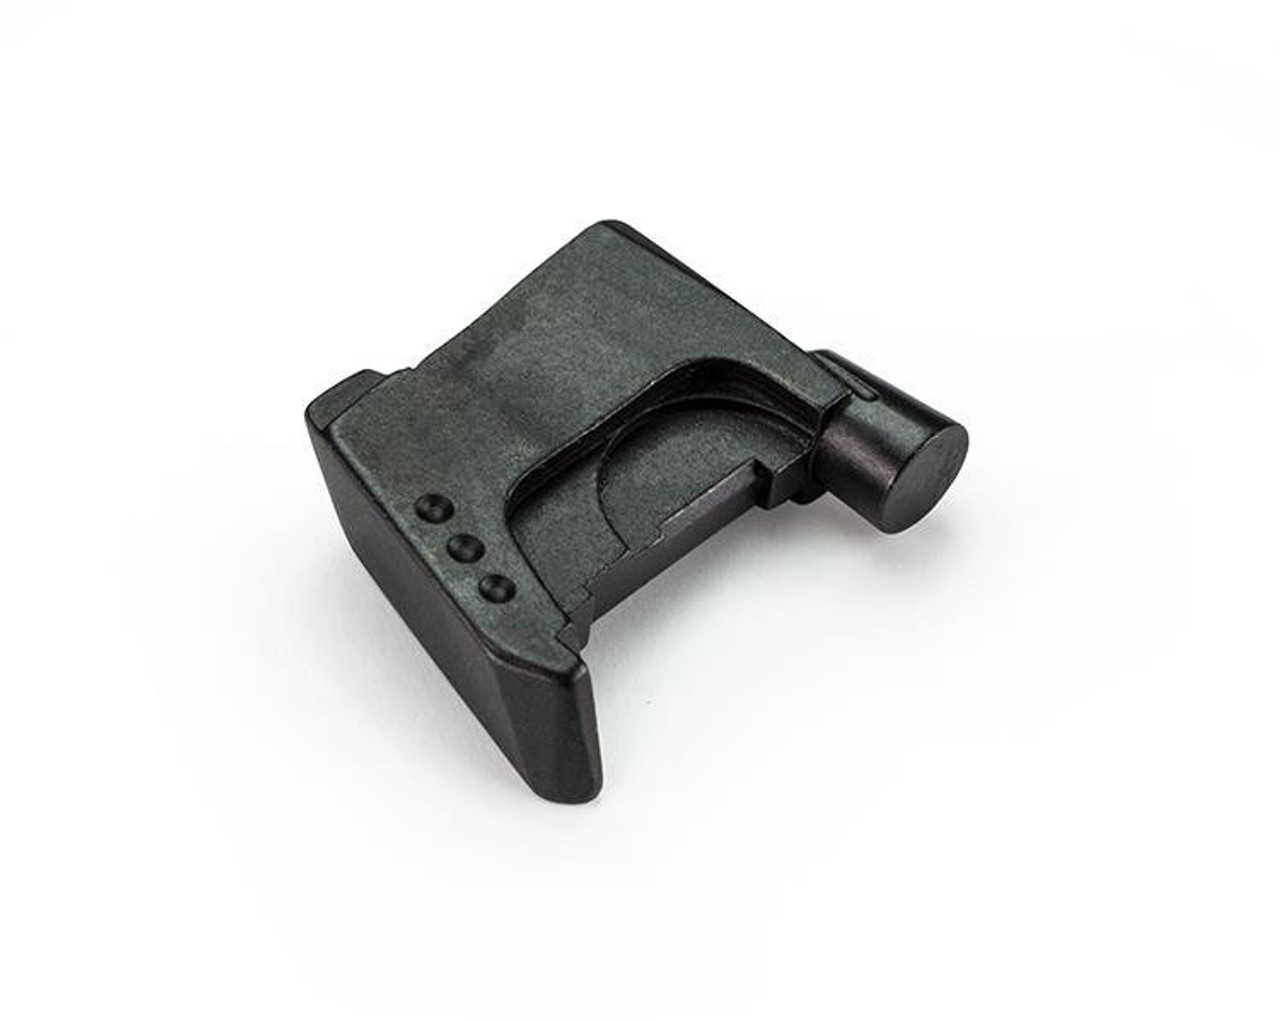 Glock Loaded Chamber Indicator (LCI), Firearm Safety